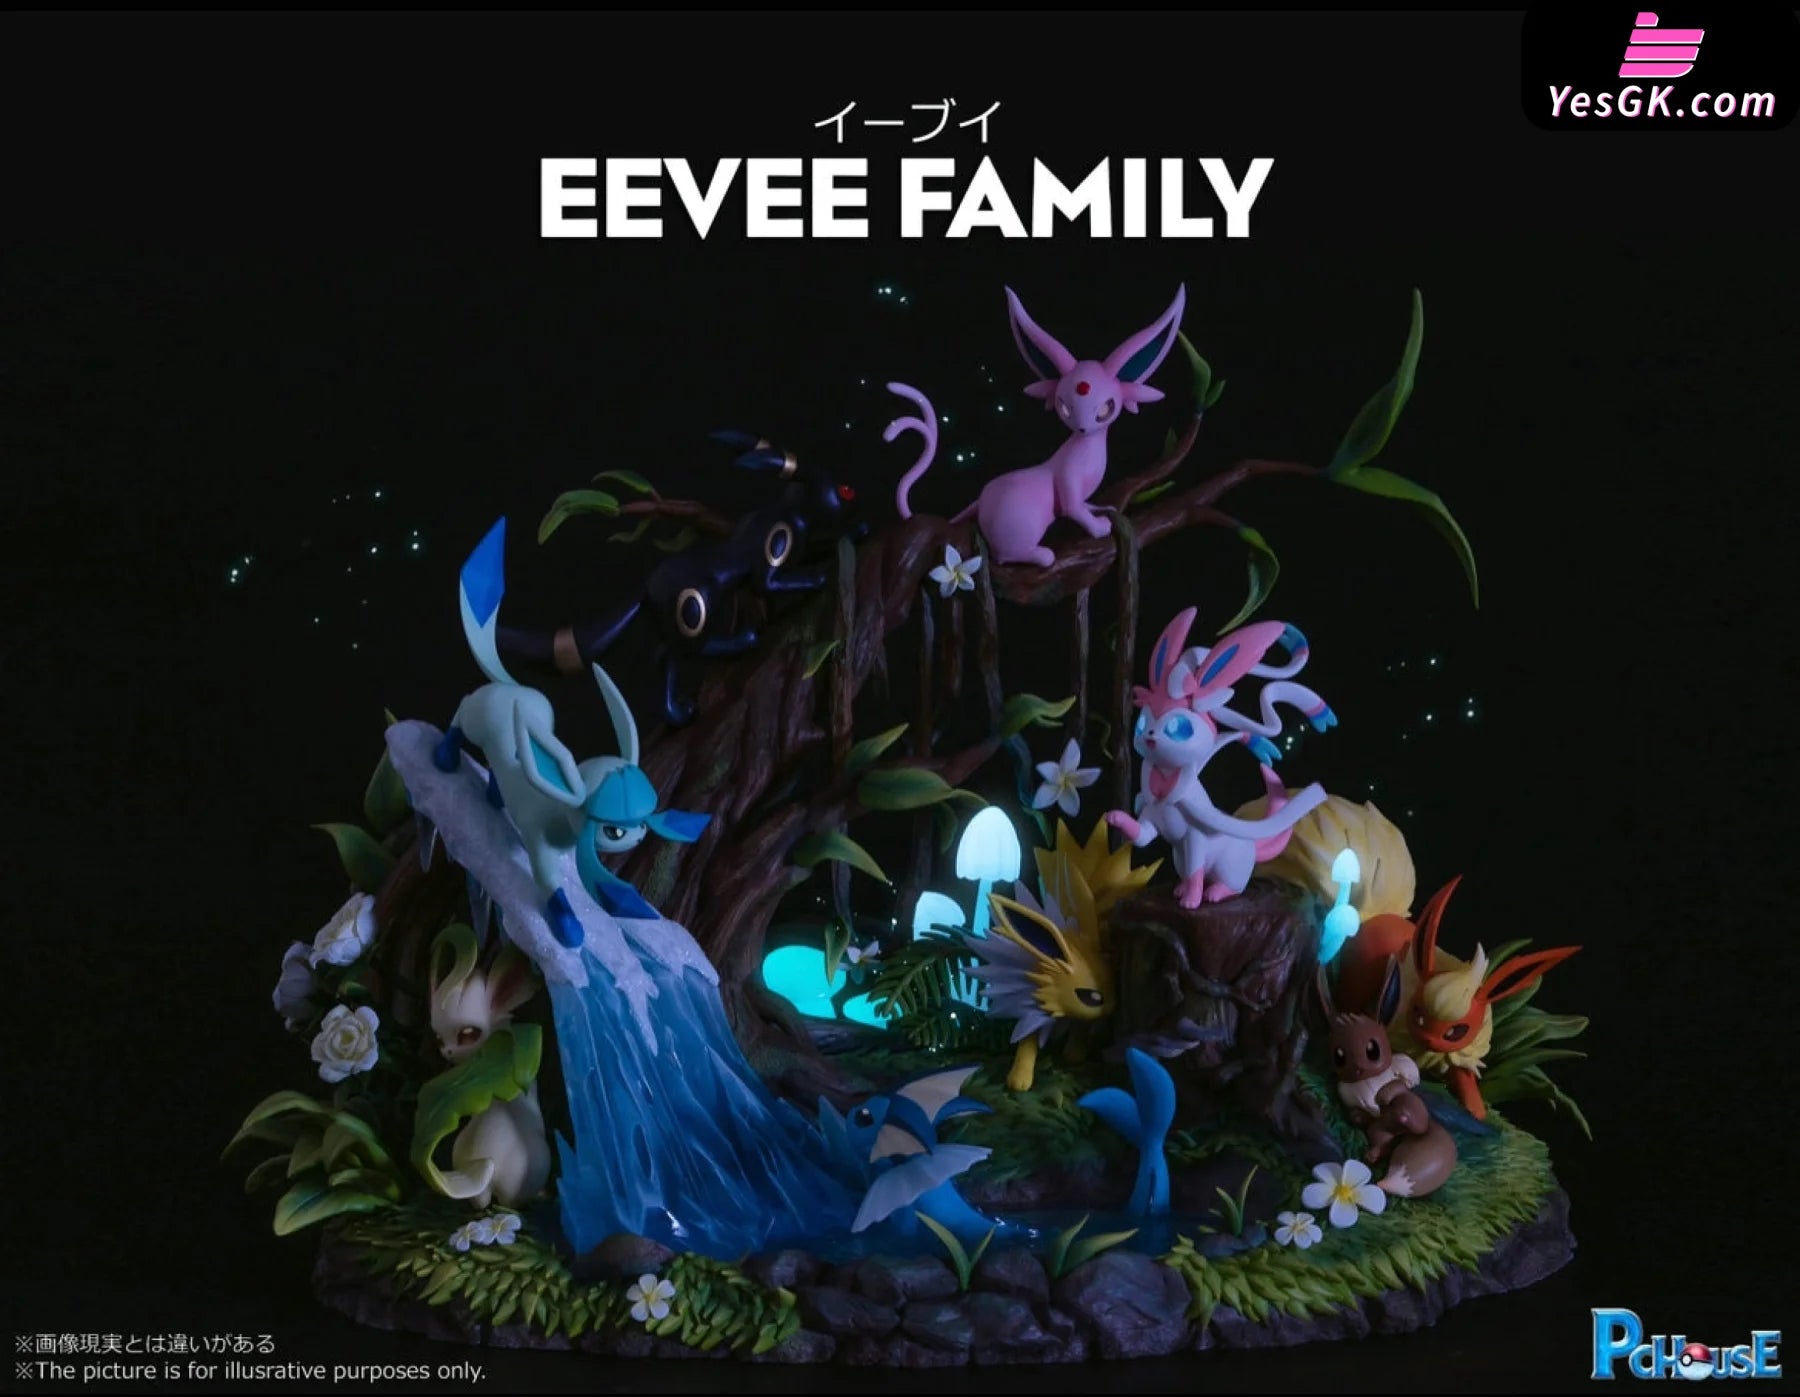 Pokémon Eevee Family Resin Statue - Pc House Studio [In-Stock] Full Payment